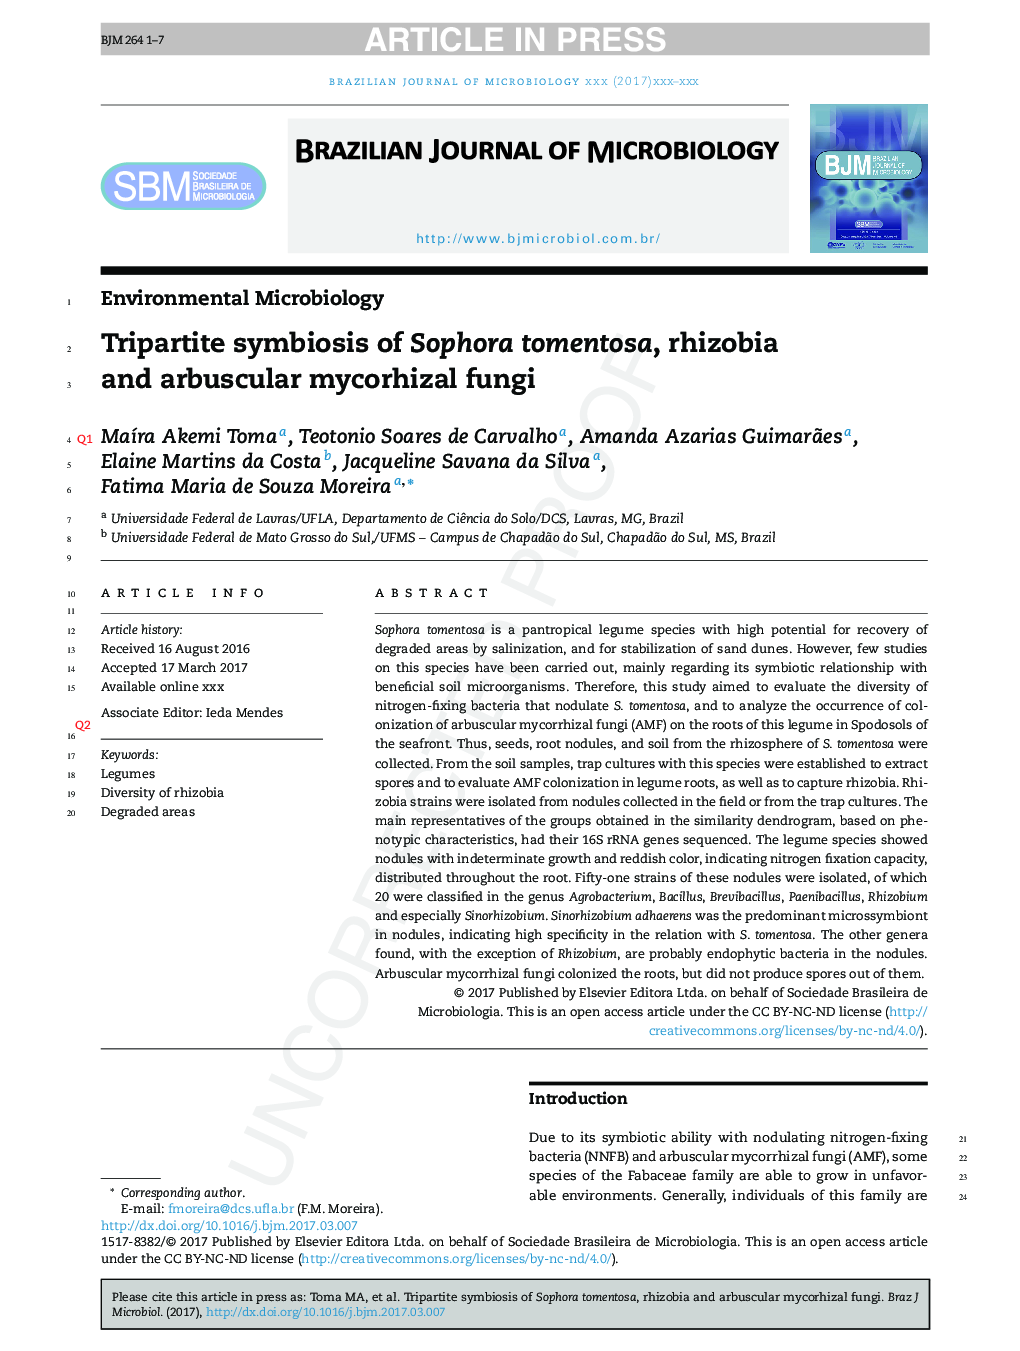 Tripartite symbiosis of Sophora tomentosa, rhizobia and arbuscular mycorhizal fungi